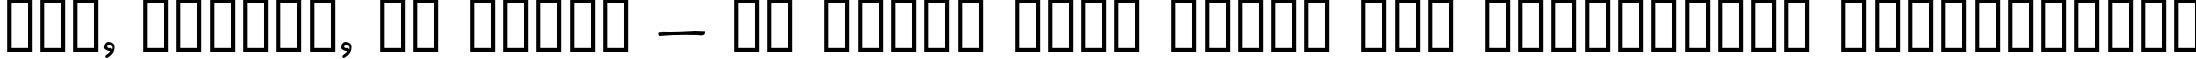 Пример написания шрифтом Dannette Outline текста на украинском